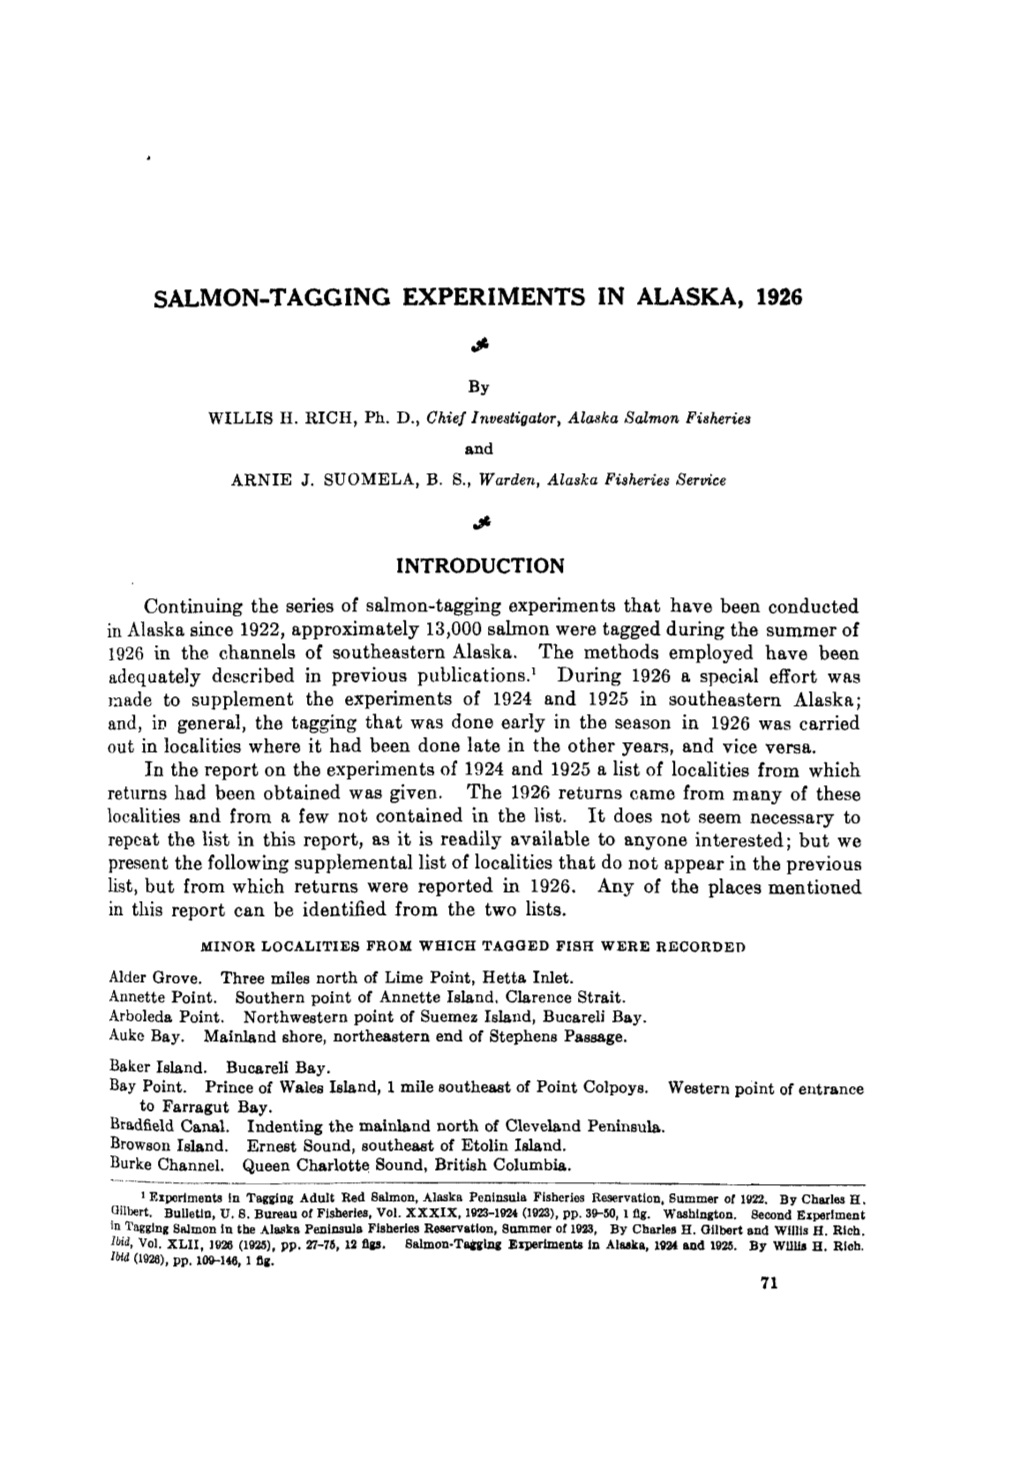 Salmon-Tagging Experiments in Alaska, 1926